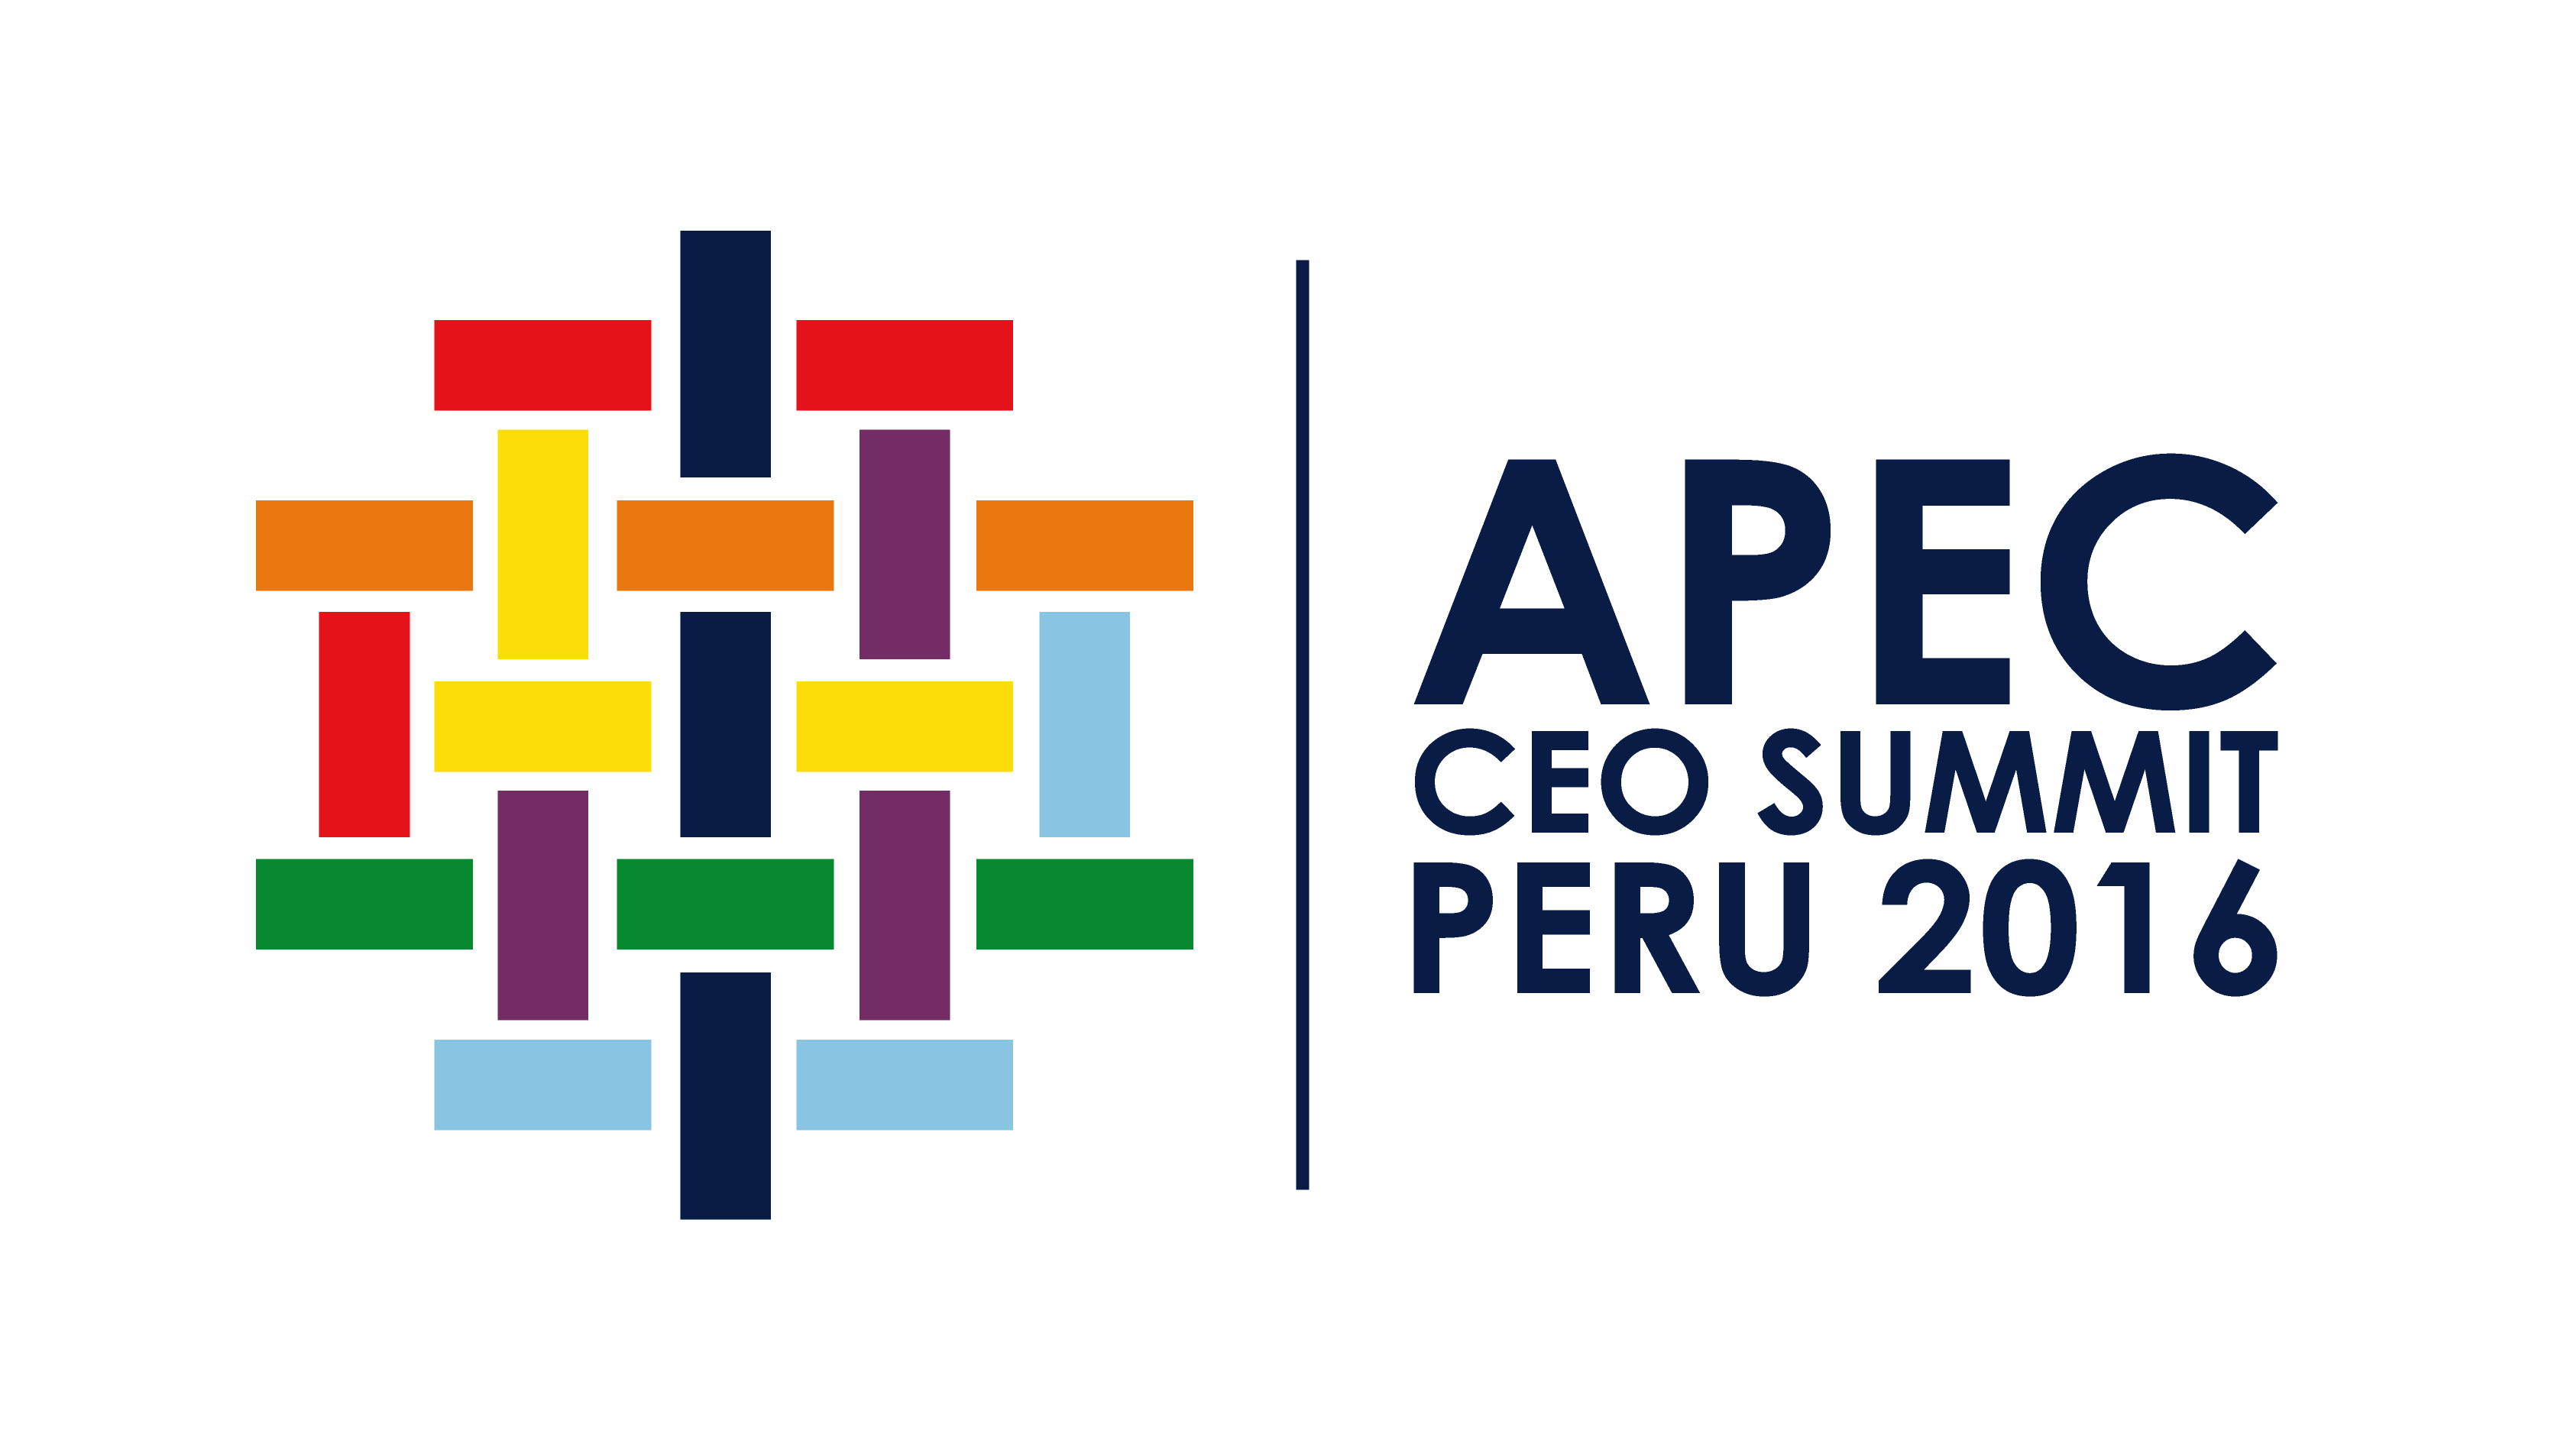 Logotipo_APEC CEO SUMMIT02 Pacific Summit Resources